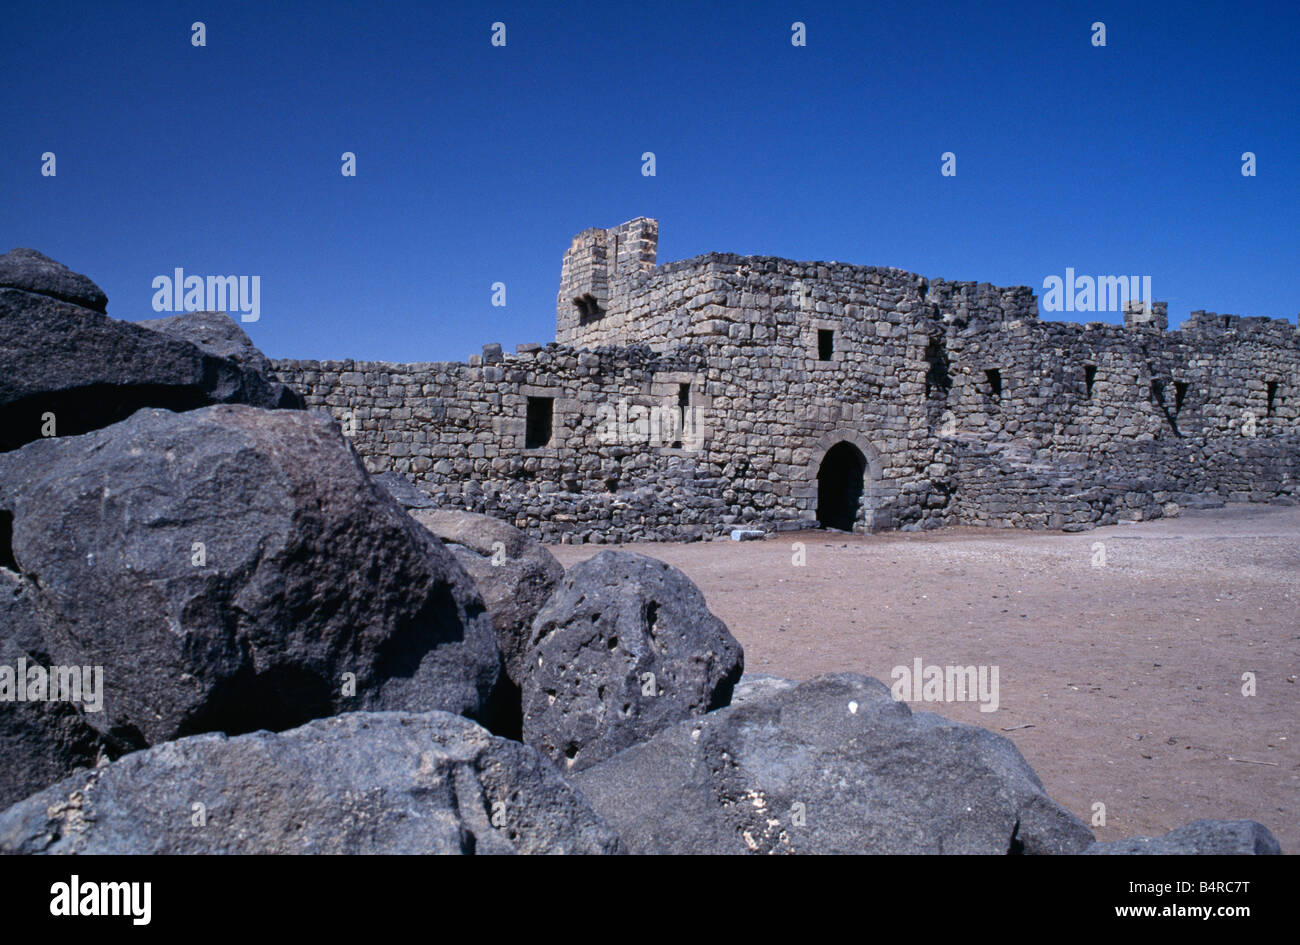 Azraq castle, one of the desert castles in Jordan. Stock Photo